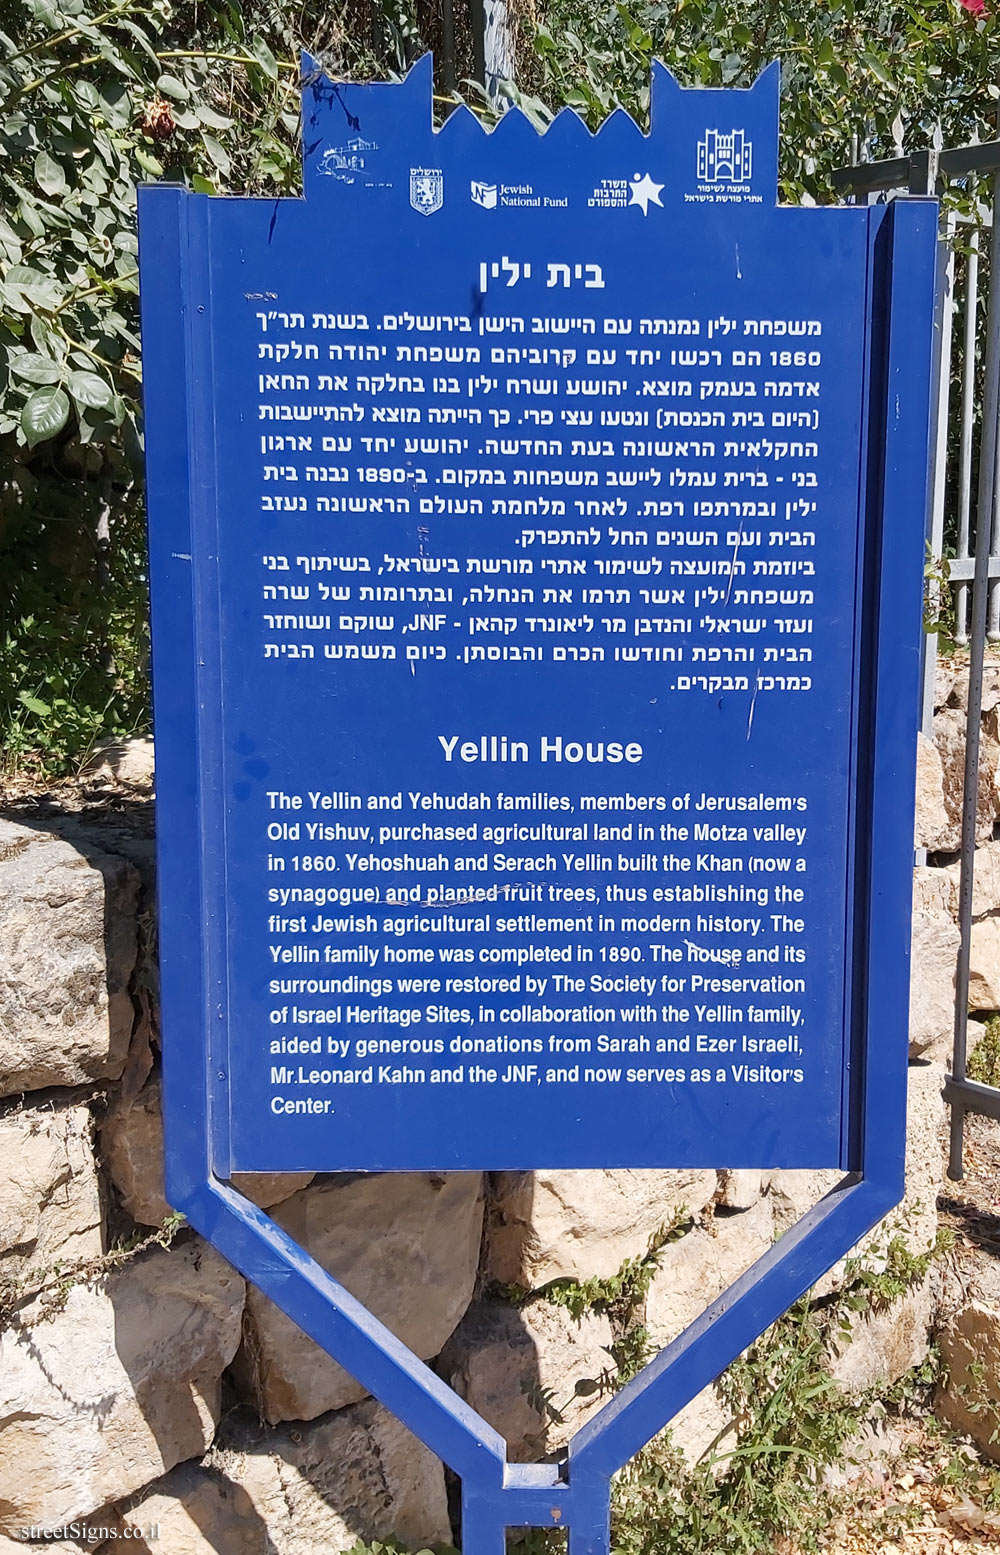 Motza Illit - Heritage Sites in Israel - Yellin House